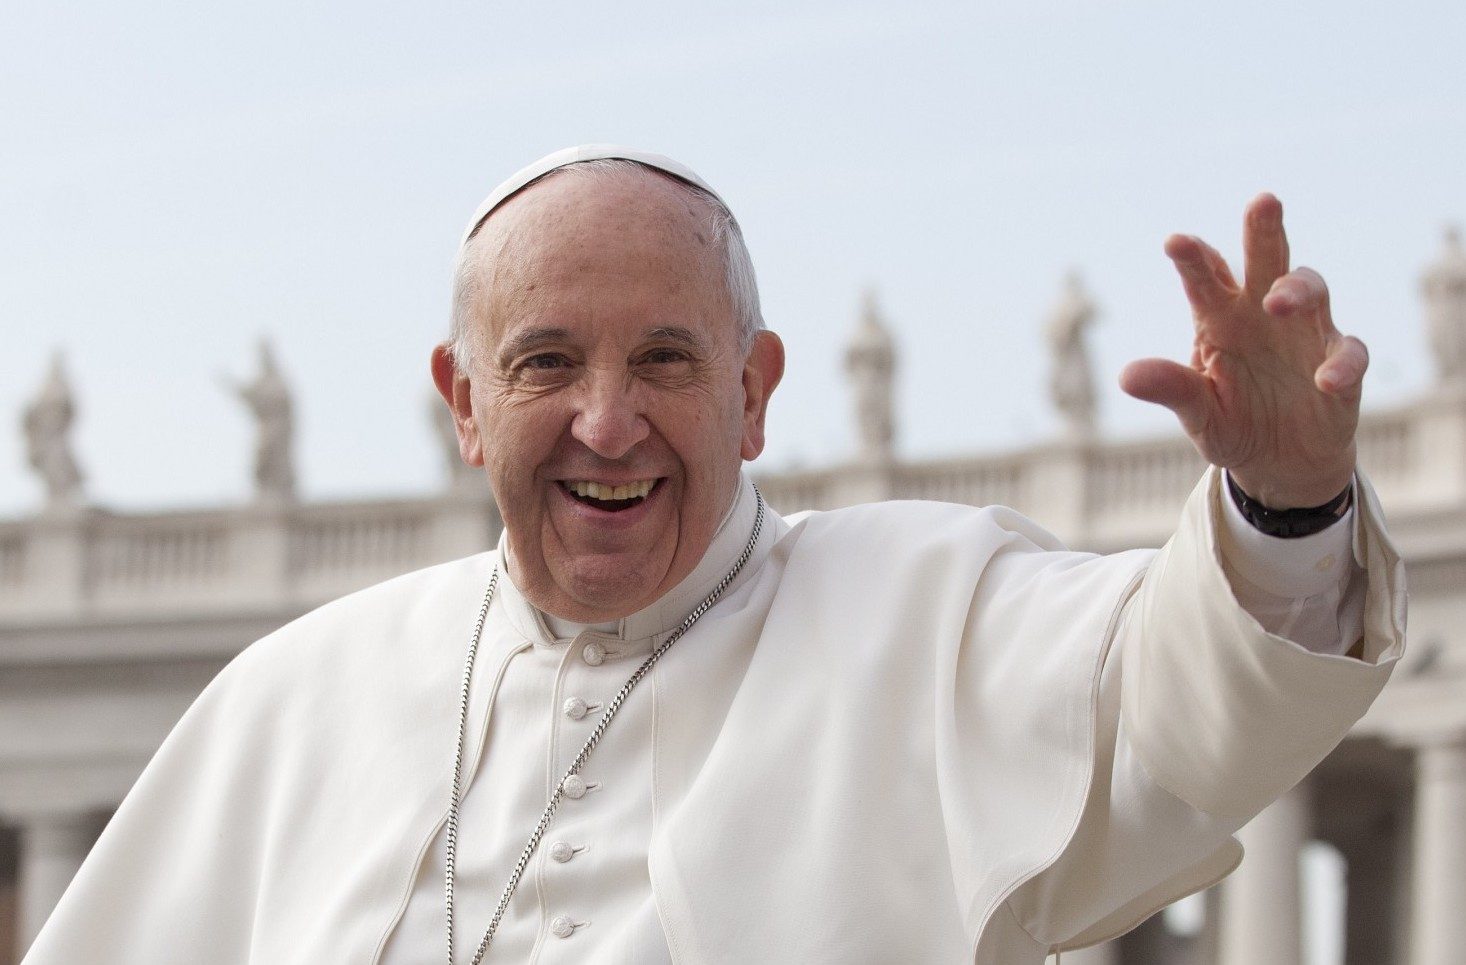 Vatican celebrates Pope Francis' birthday: Bergoglio turns 83 today